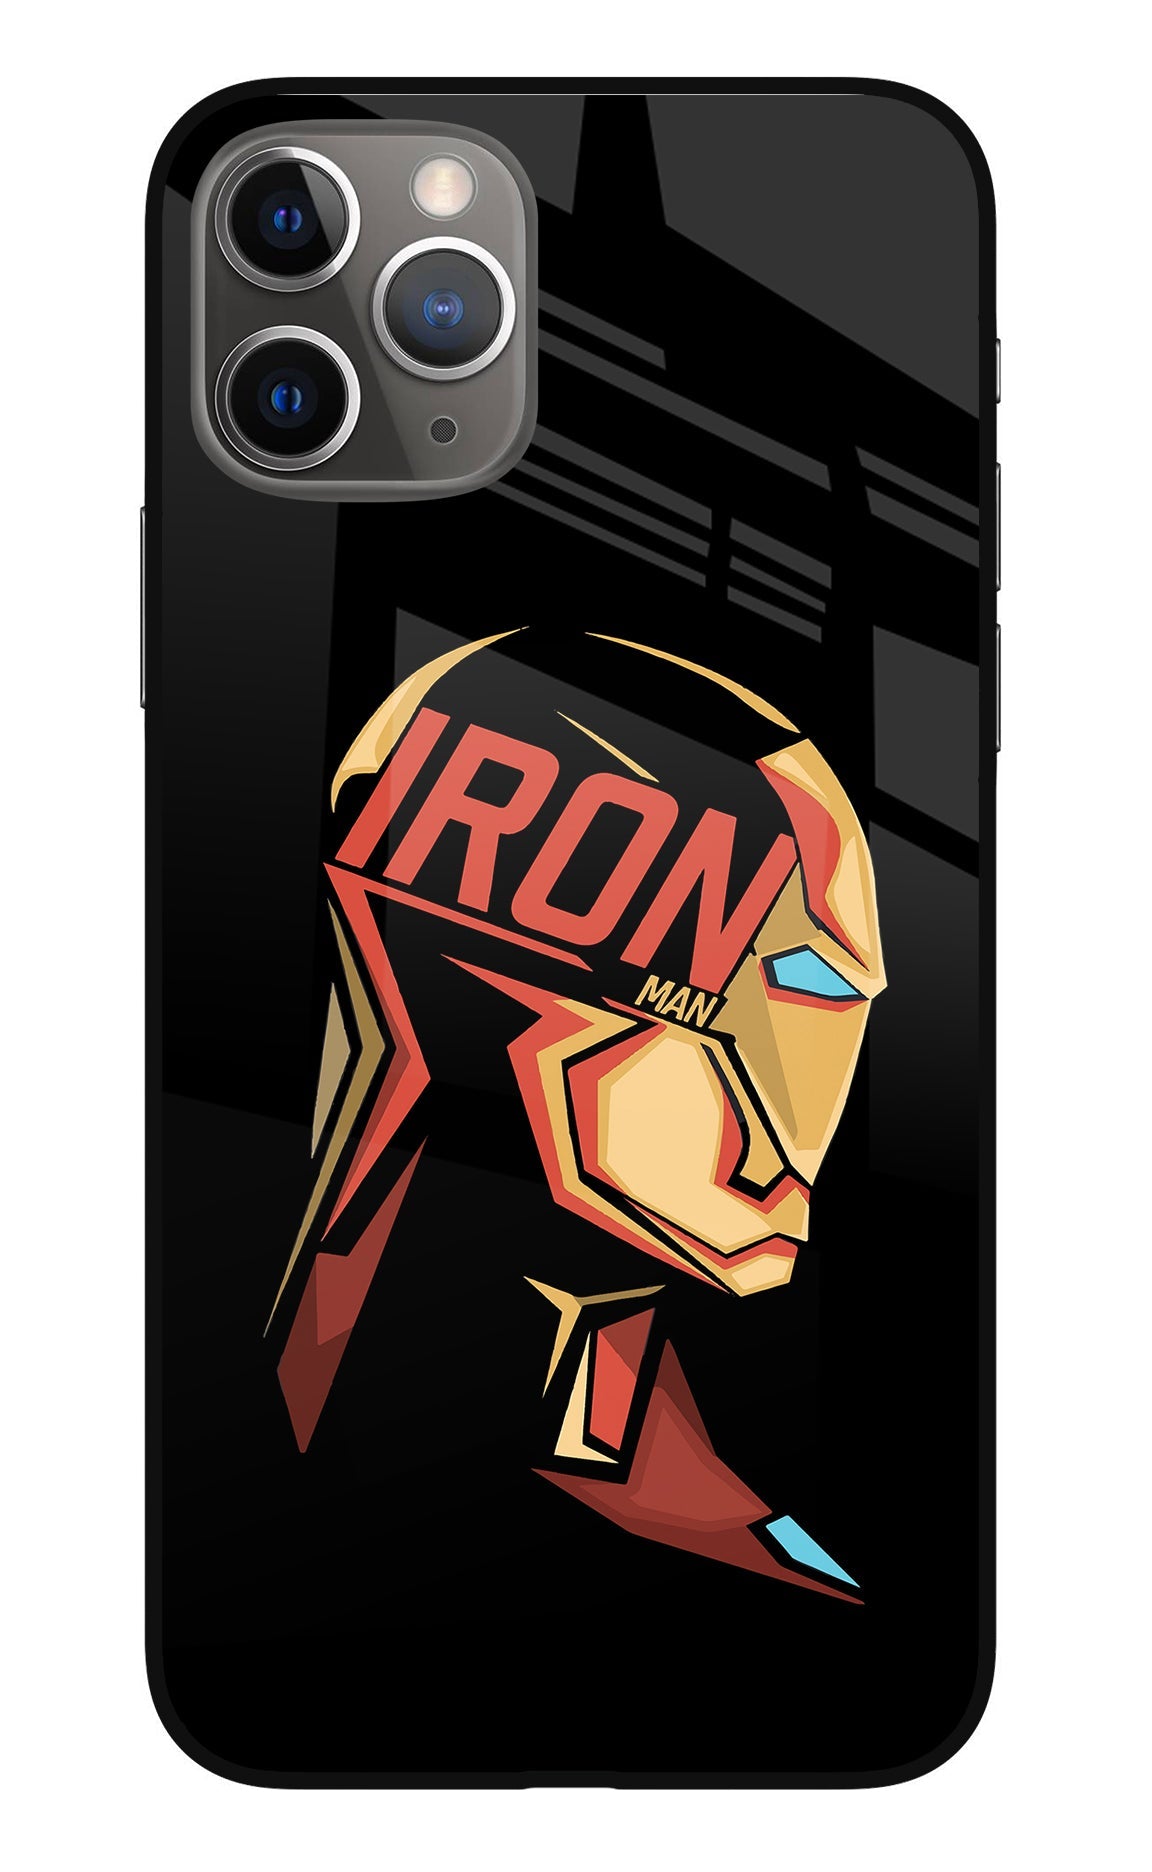 IronMan iPhone 11 Pro Glass Case